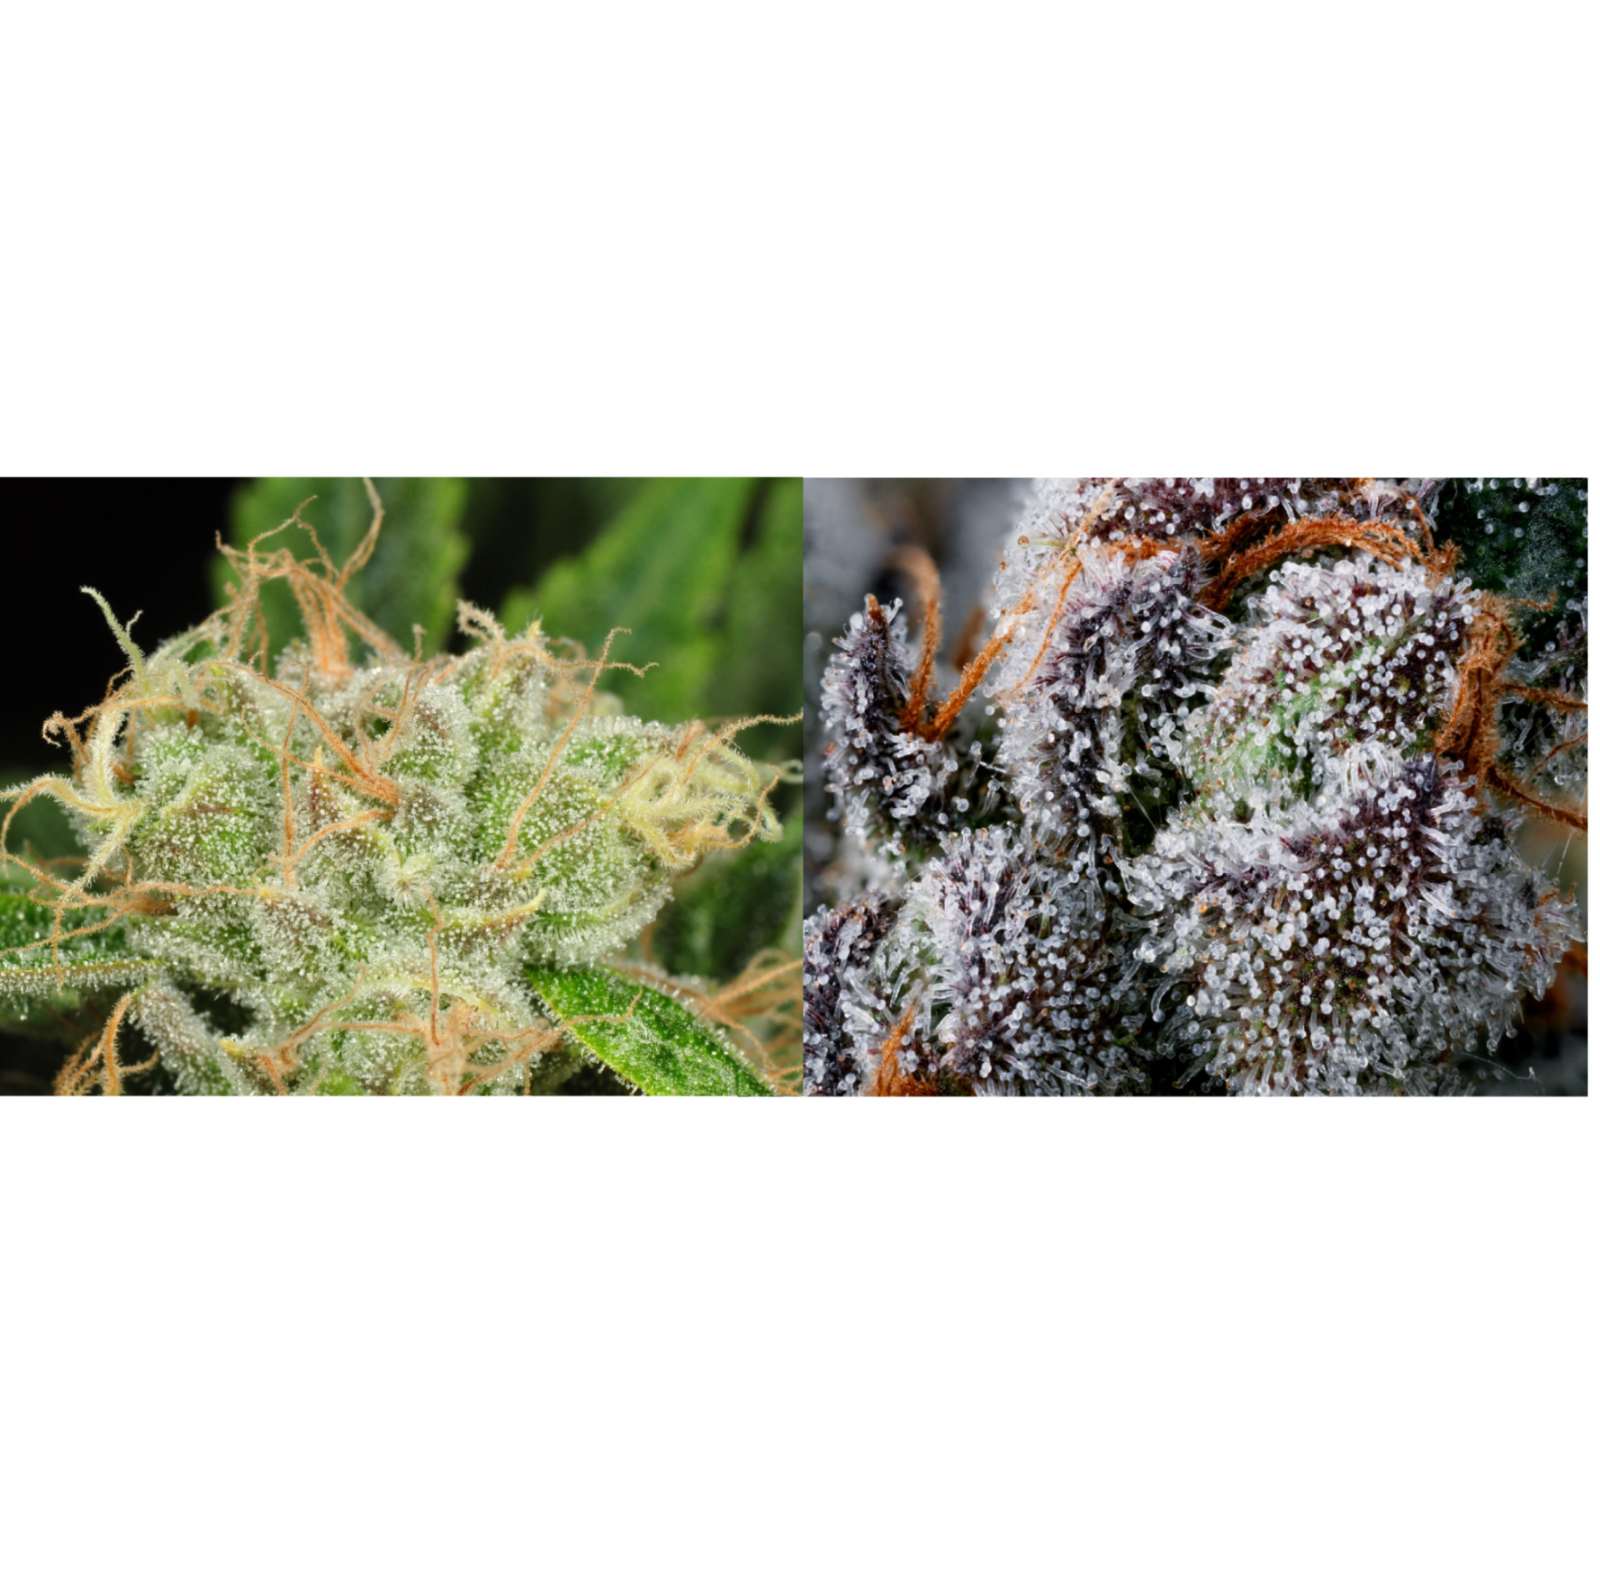 https://dcexoticgifts.com/wp-content/uploads/2022/04/Flower-Connoisseur-Combo-Two-0.125-oz-of-Top-Shelf-Cannabis-Flower.jpg